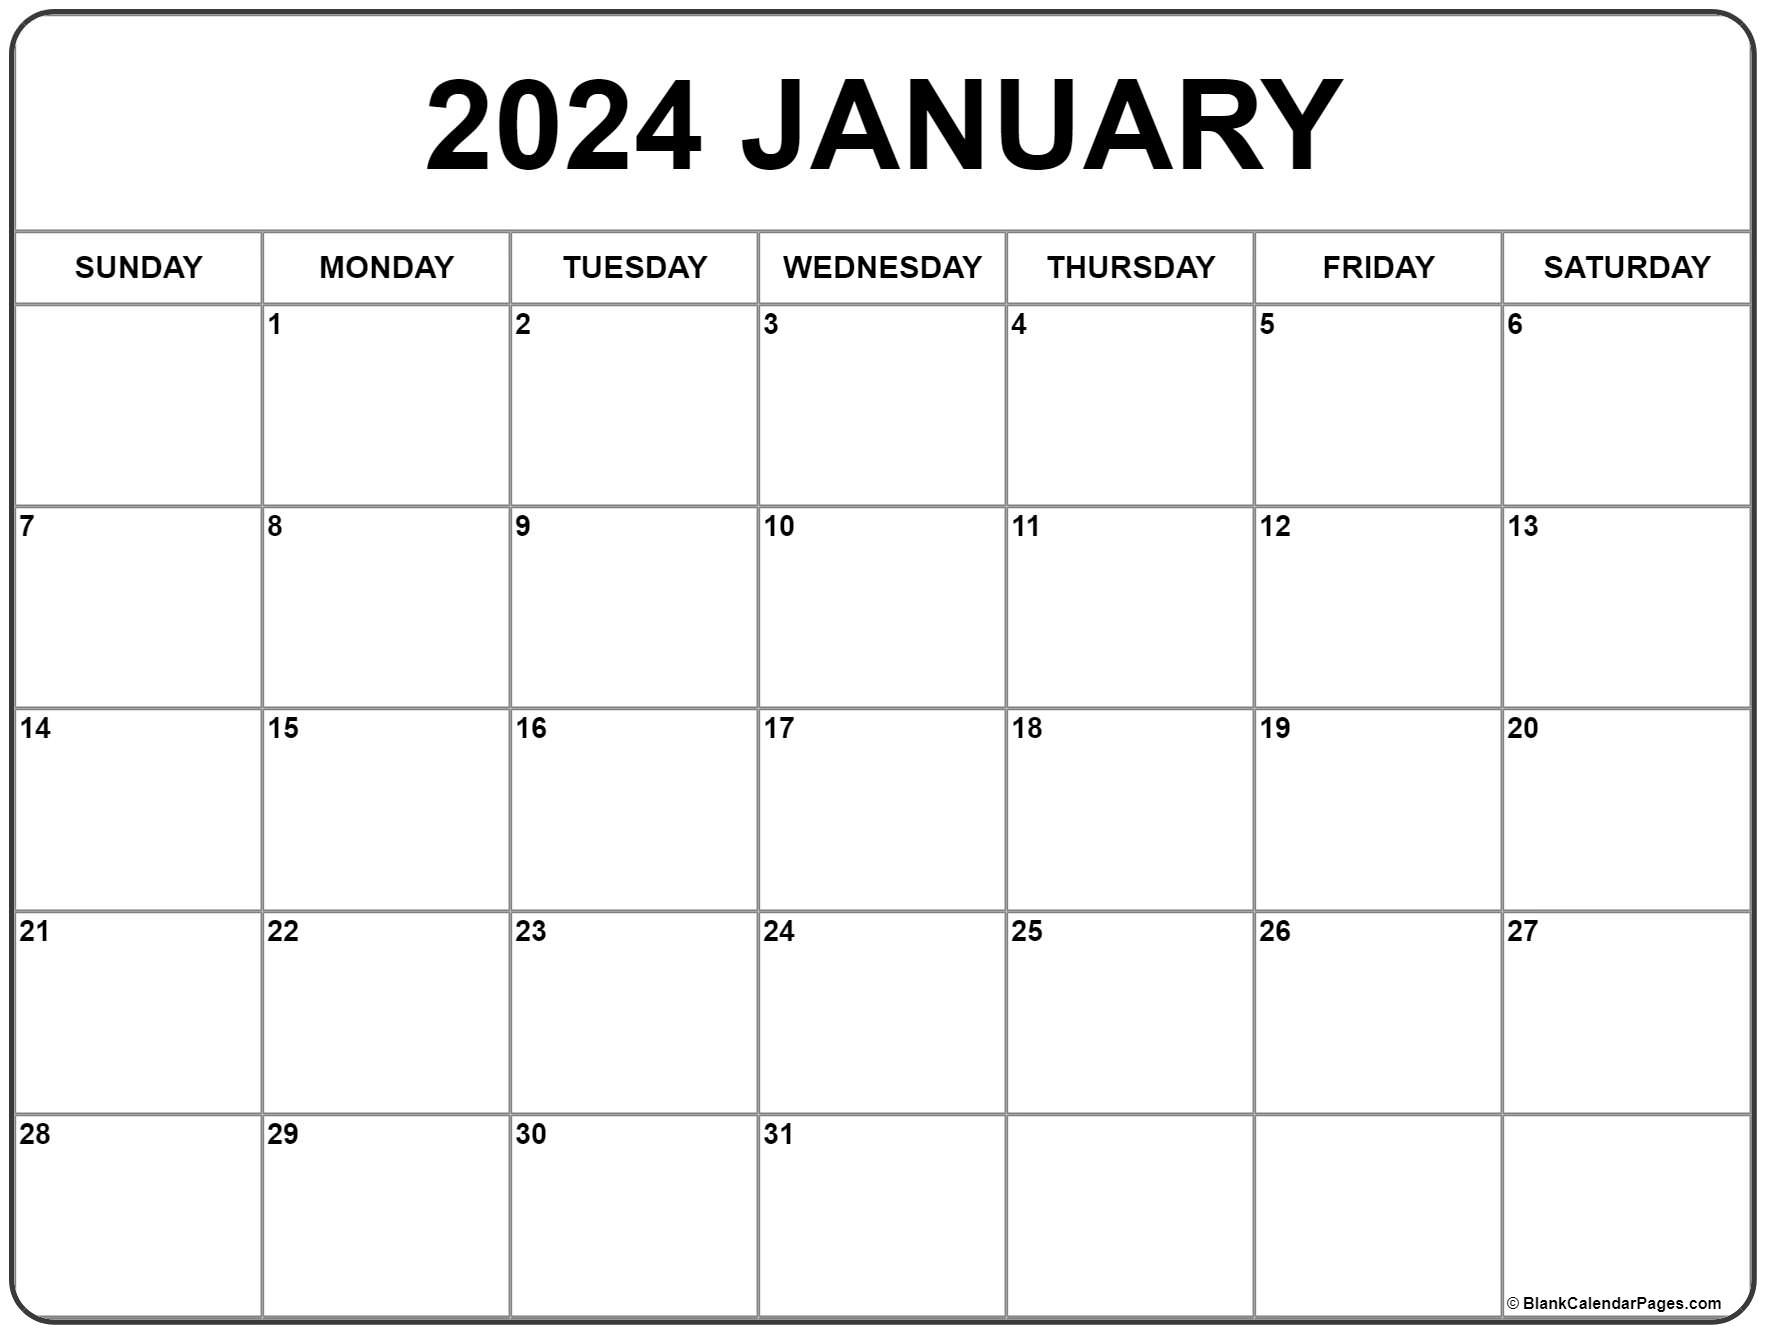 January 2024 Calendar | Free Printable Calendar for Janurary 2024 Printable Calendar